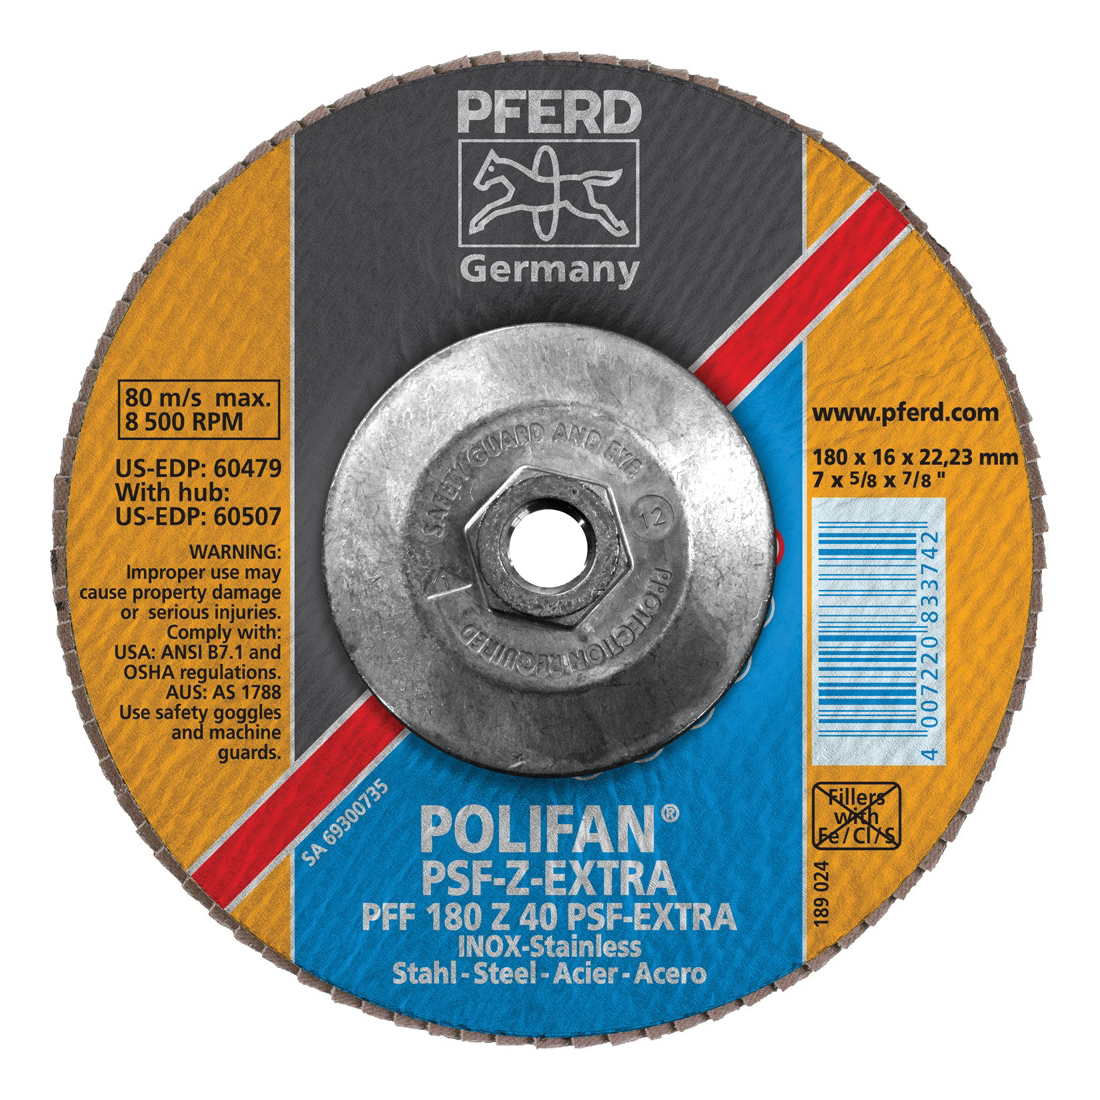 PFERD Polifan® 60507 Universal Line PSF Z-EXTRA Threaded Coated Abrasive Flap Disc, 7 in Dia, 40 Grit, Zirconia Alumina Abrasive, Type 27 Flat Disc